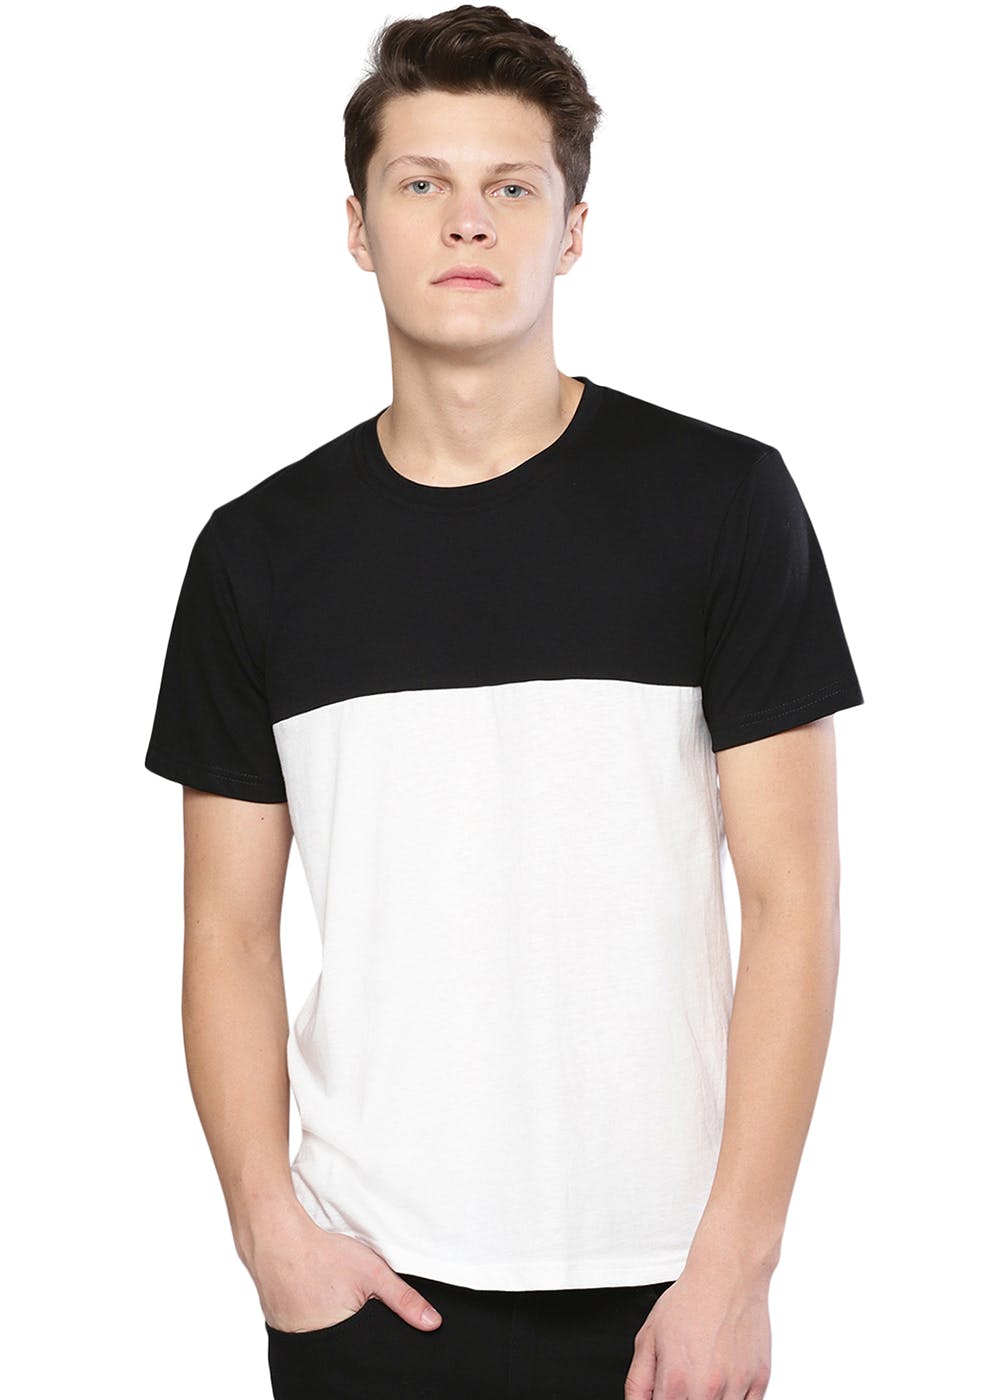 Get Black White Half Sleeves T Shirt At 584 Lbb Shop